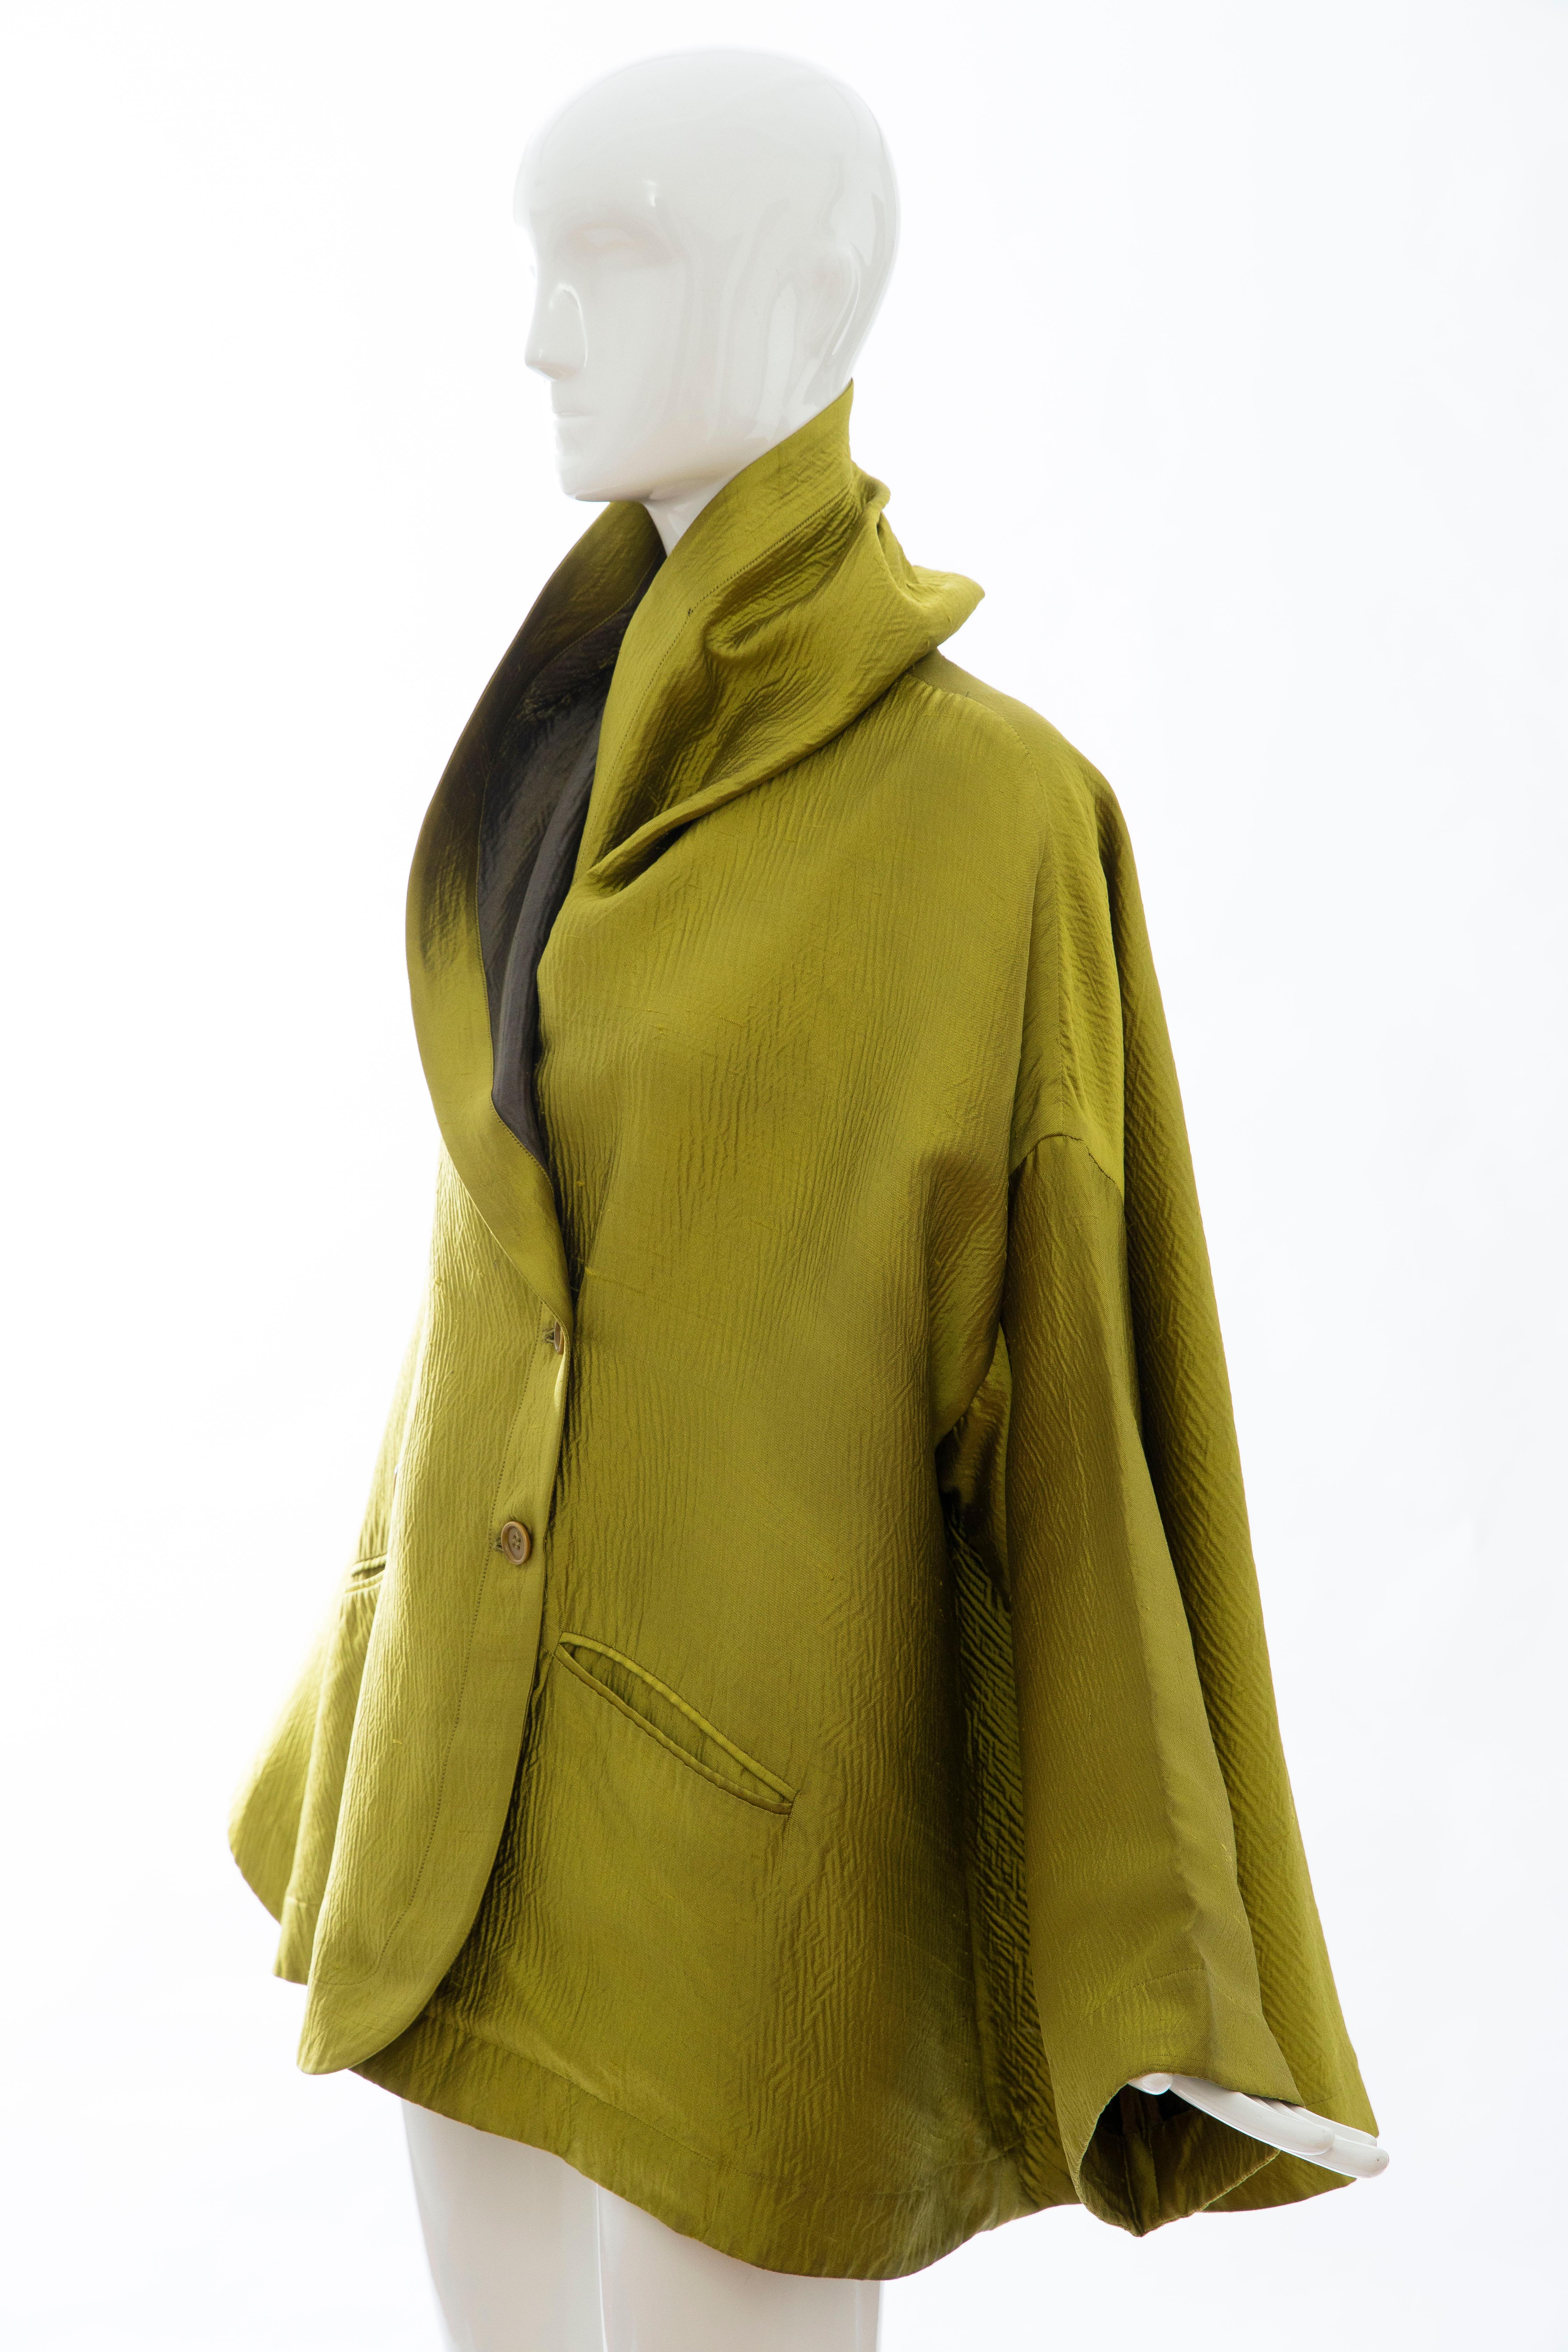 Romeo Gigli Runway Silk Cotton Chartreuse Green Evening Jacket, Fall 1991 8